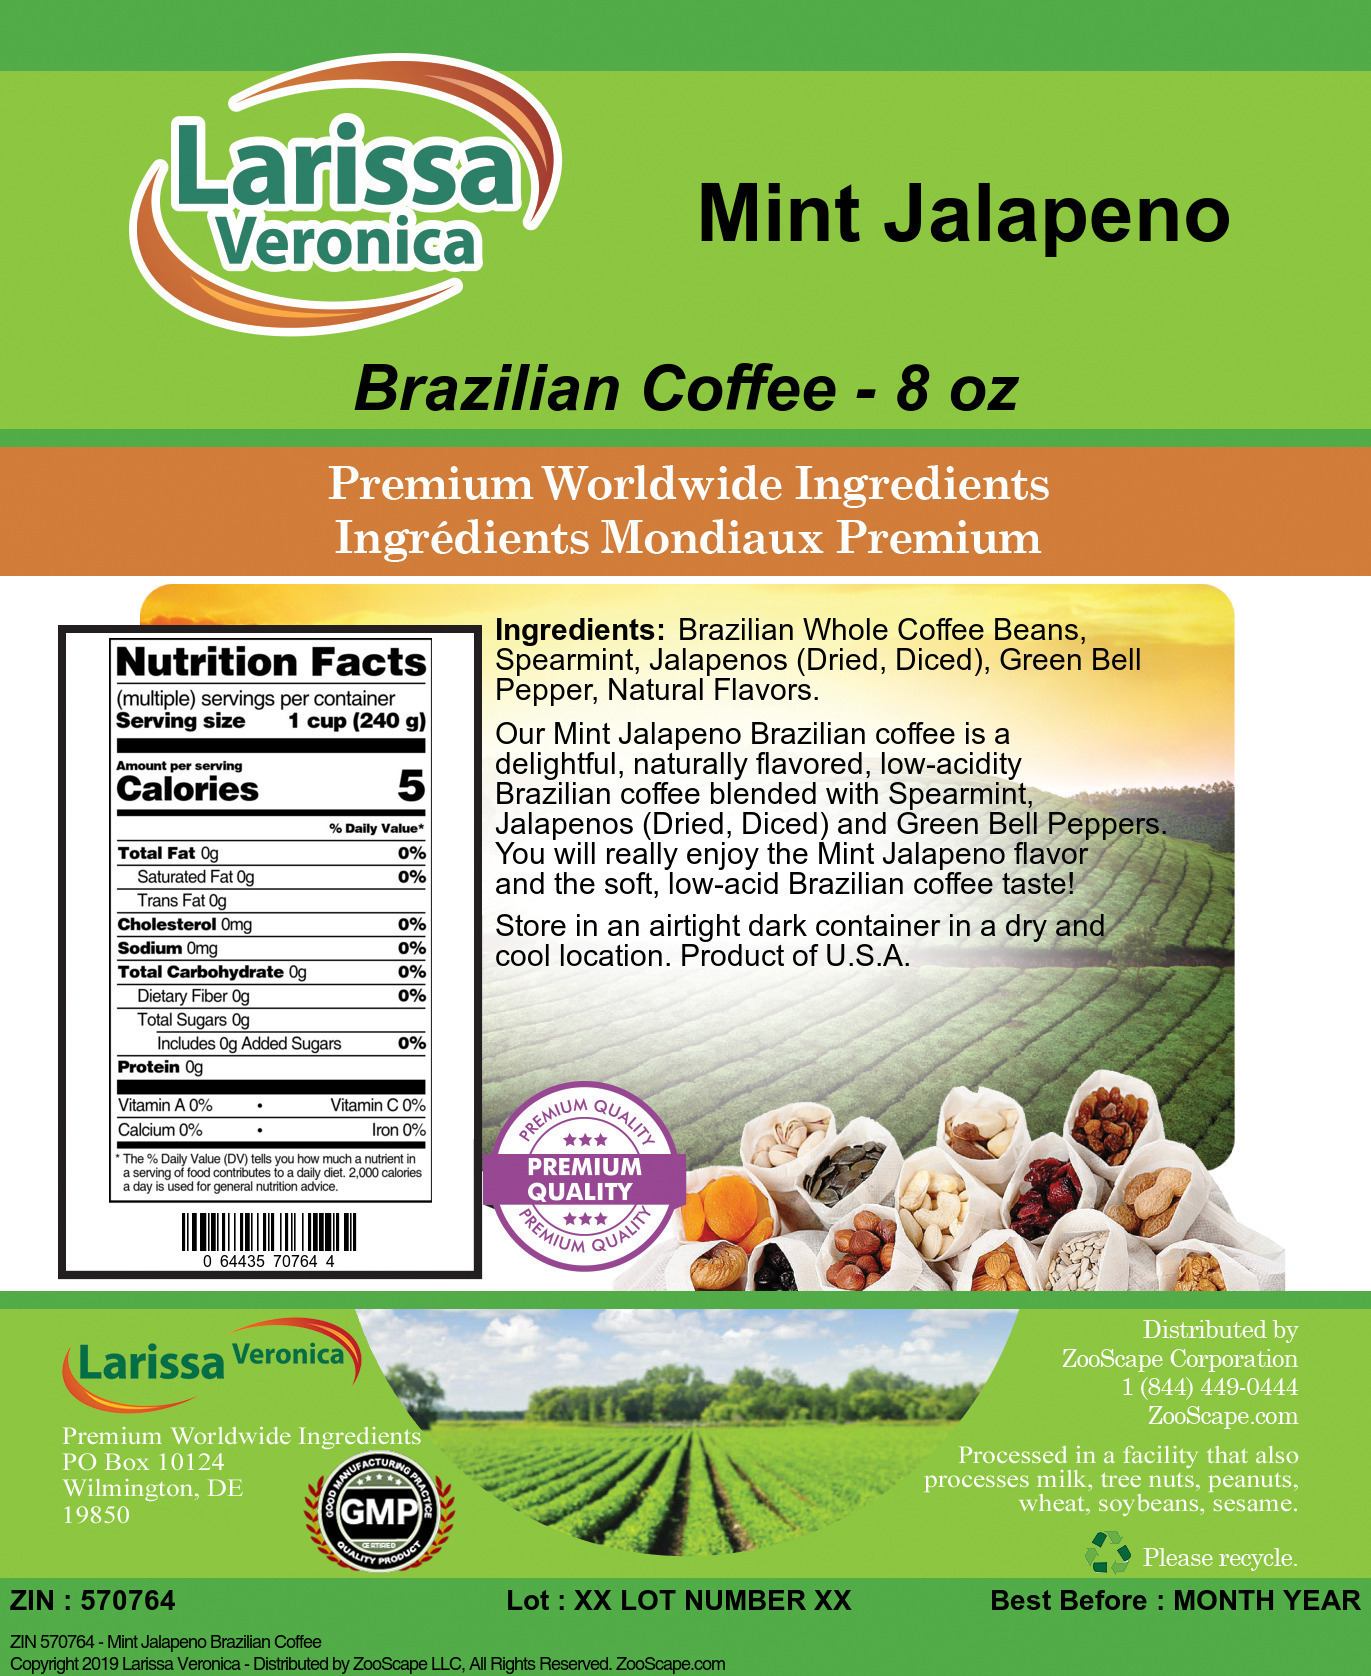 Mint Jalapeno Brazilian Coffee - Label